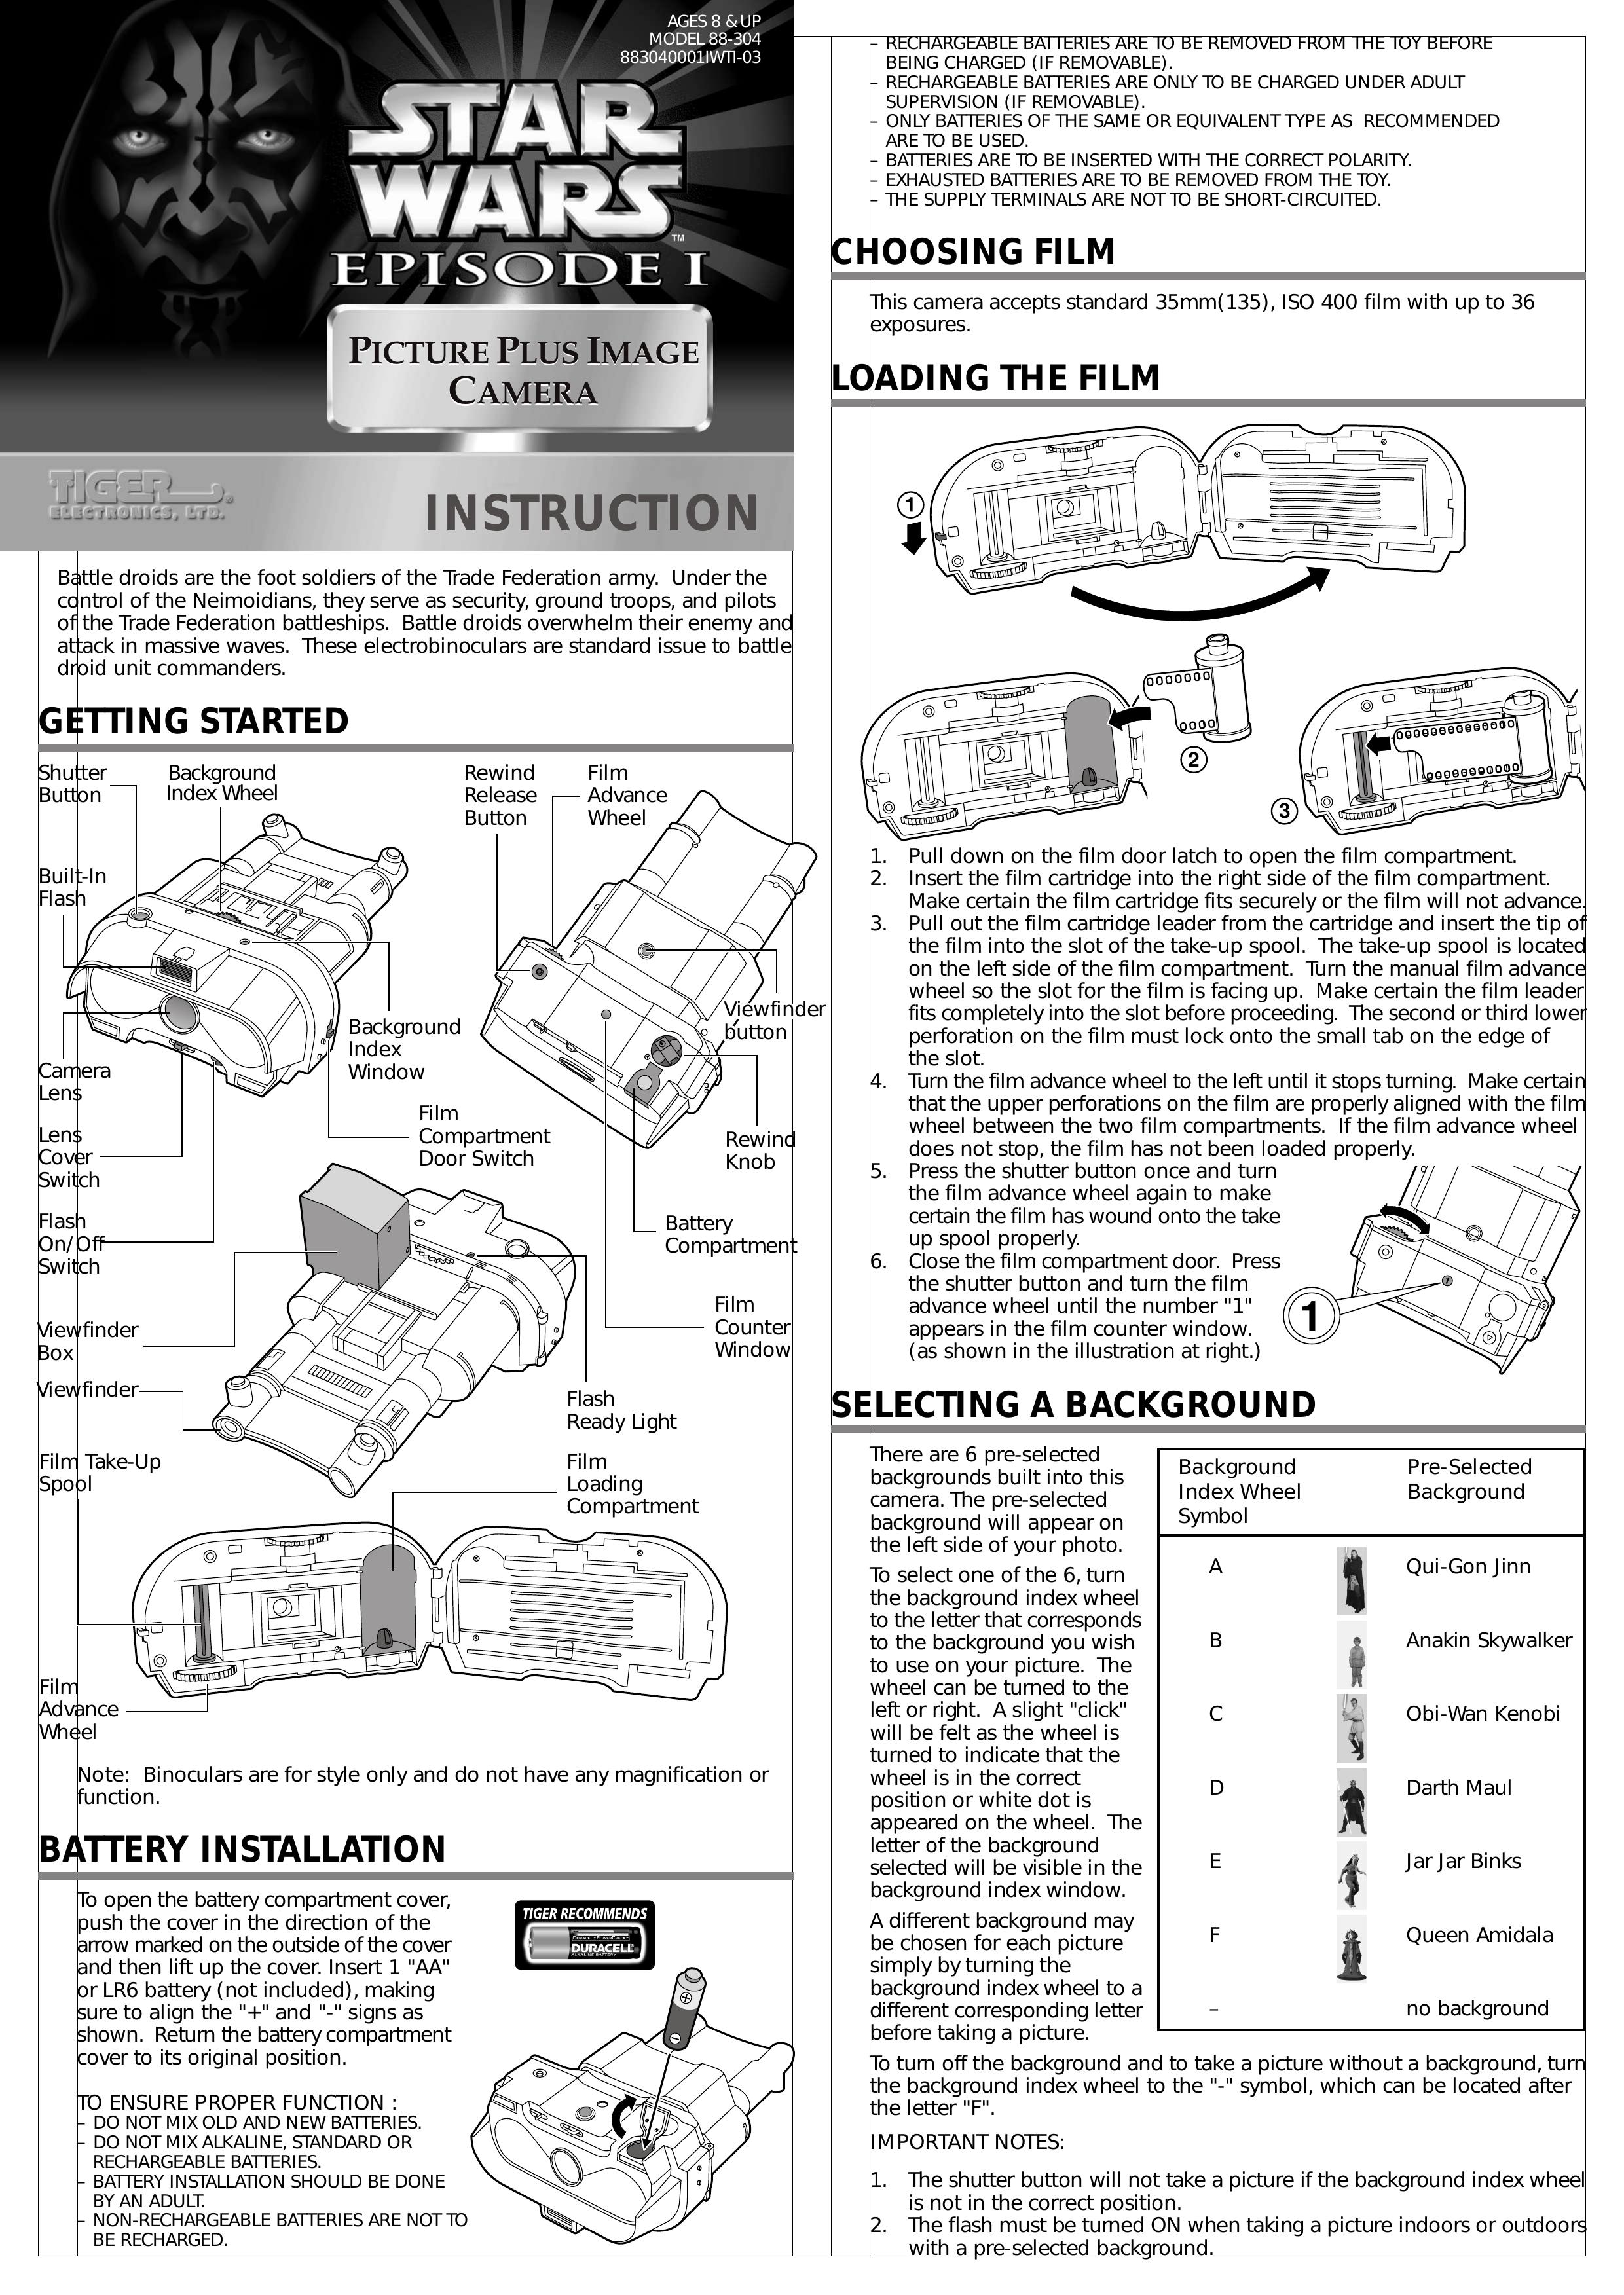 Hasbro 88-304 Digital Camera User Manual